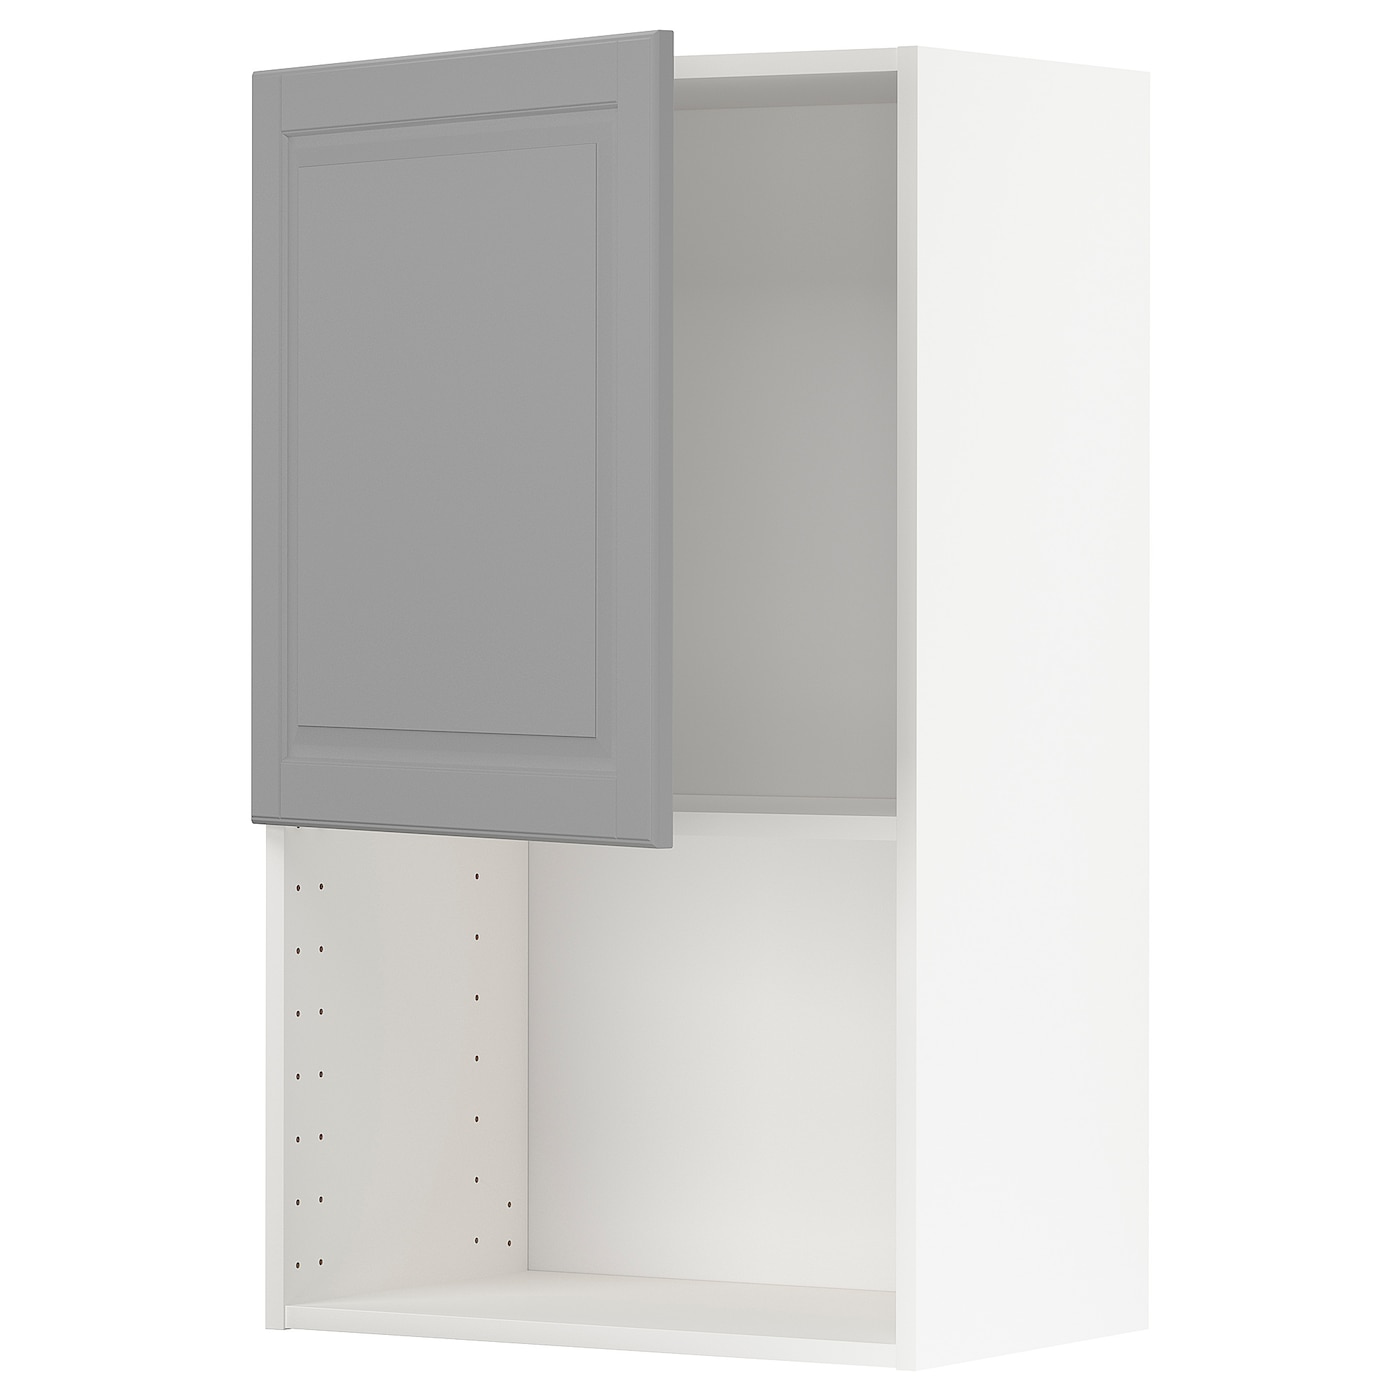 METOD Навесной шкаф - METOD IKEA/ МЕТОД ИКЕА, 100х60 см, белый/серый